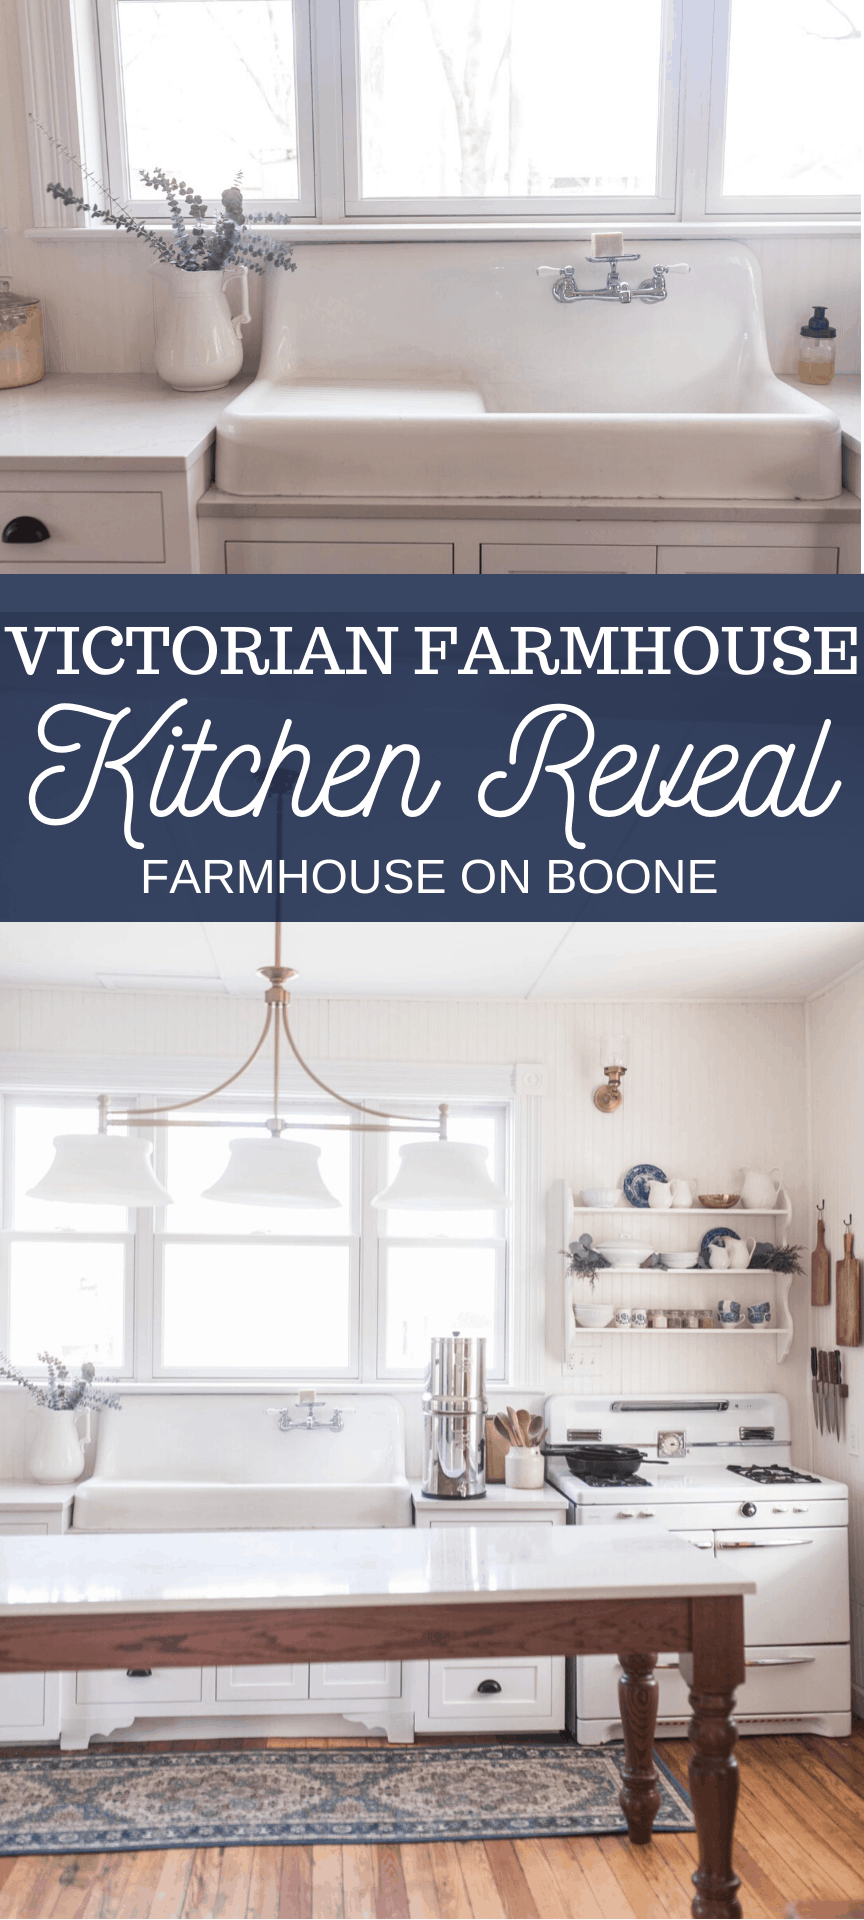 https://www.farmhouseonboone.com/wp-content/uploads/2020/01/Victorian-Farmhouse-Kitchen-Reveal.png